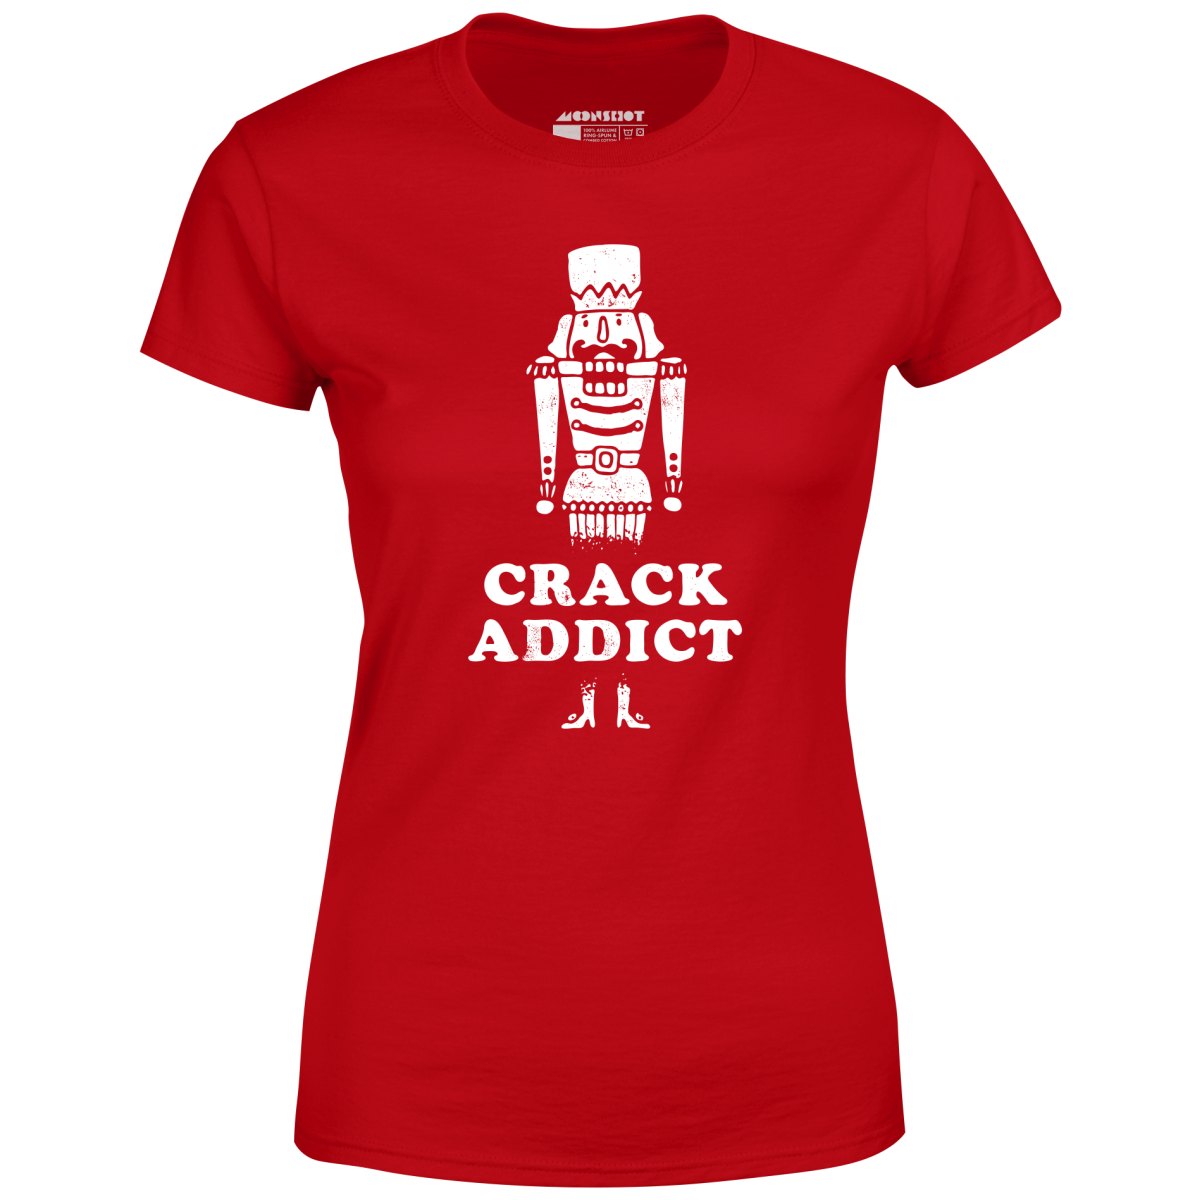 Crack Addict - Women's T-Shirt